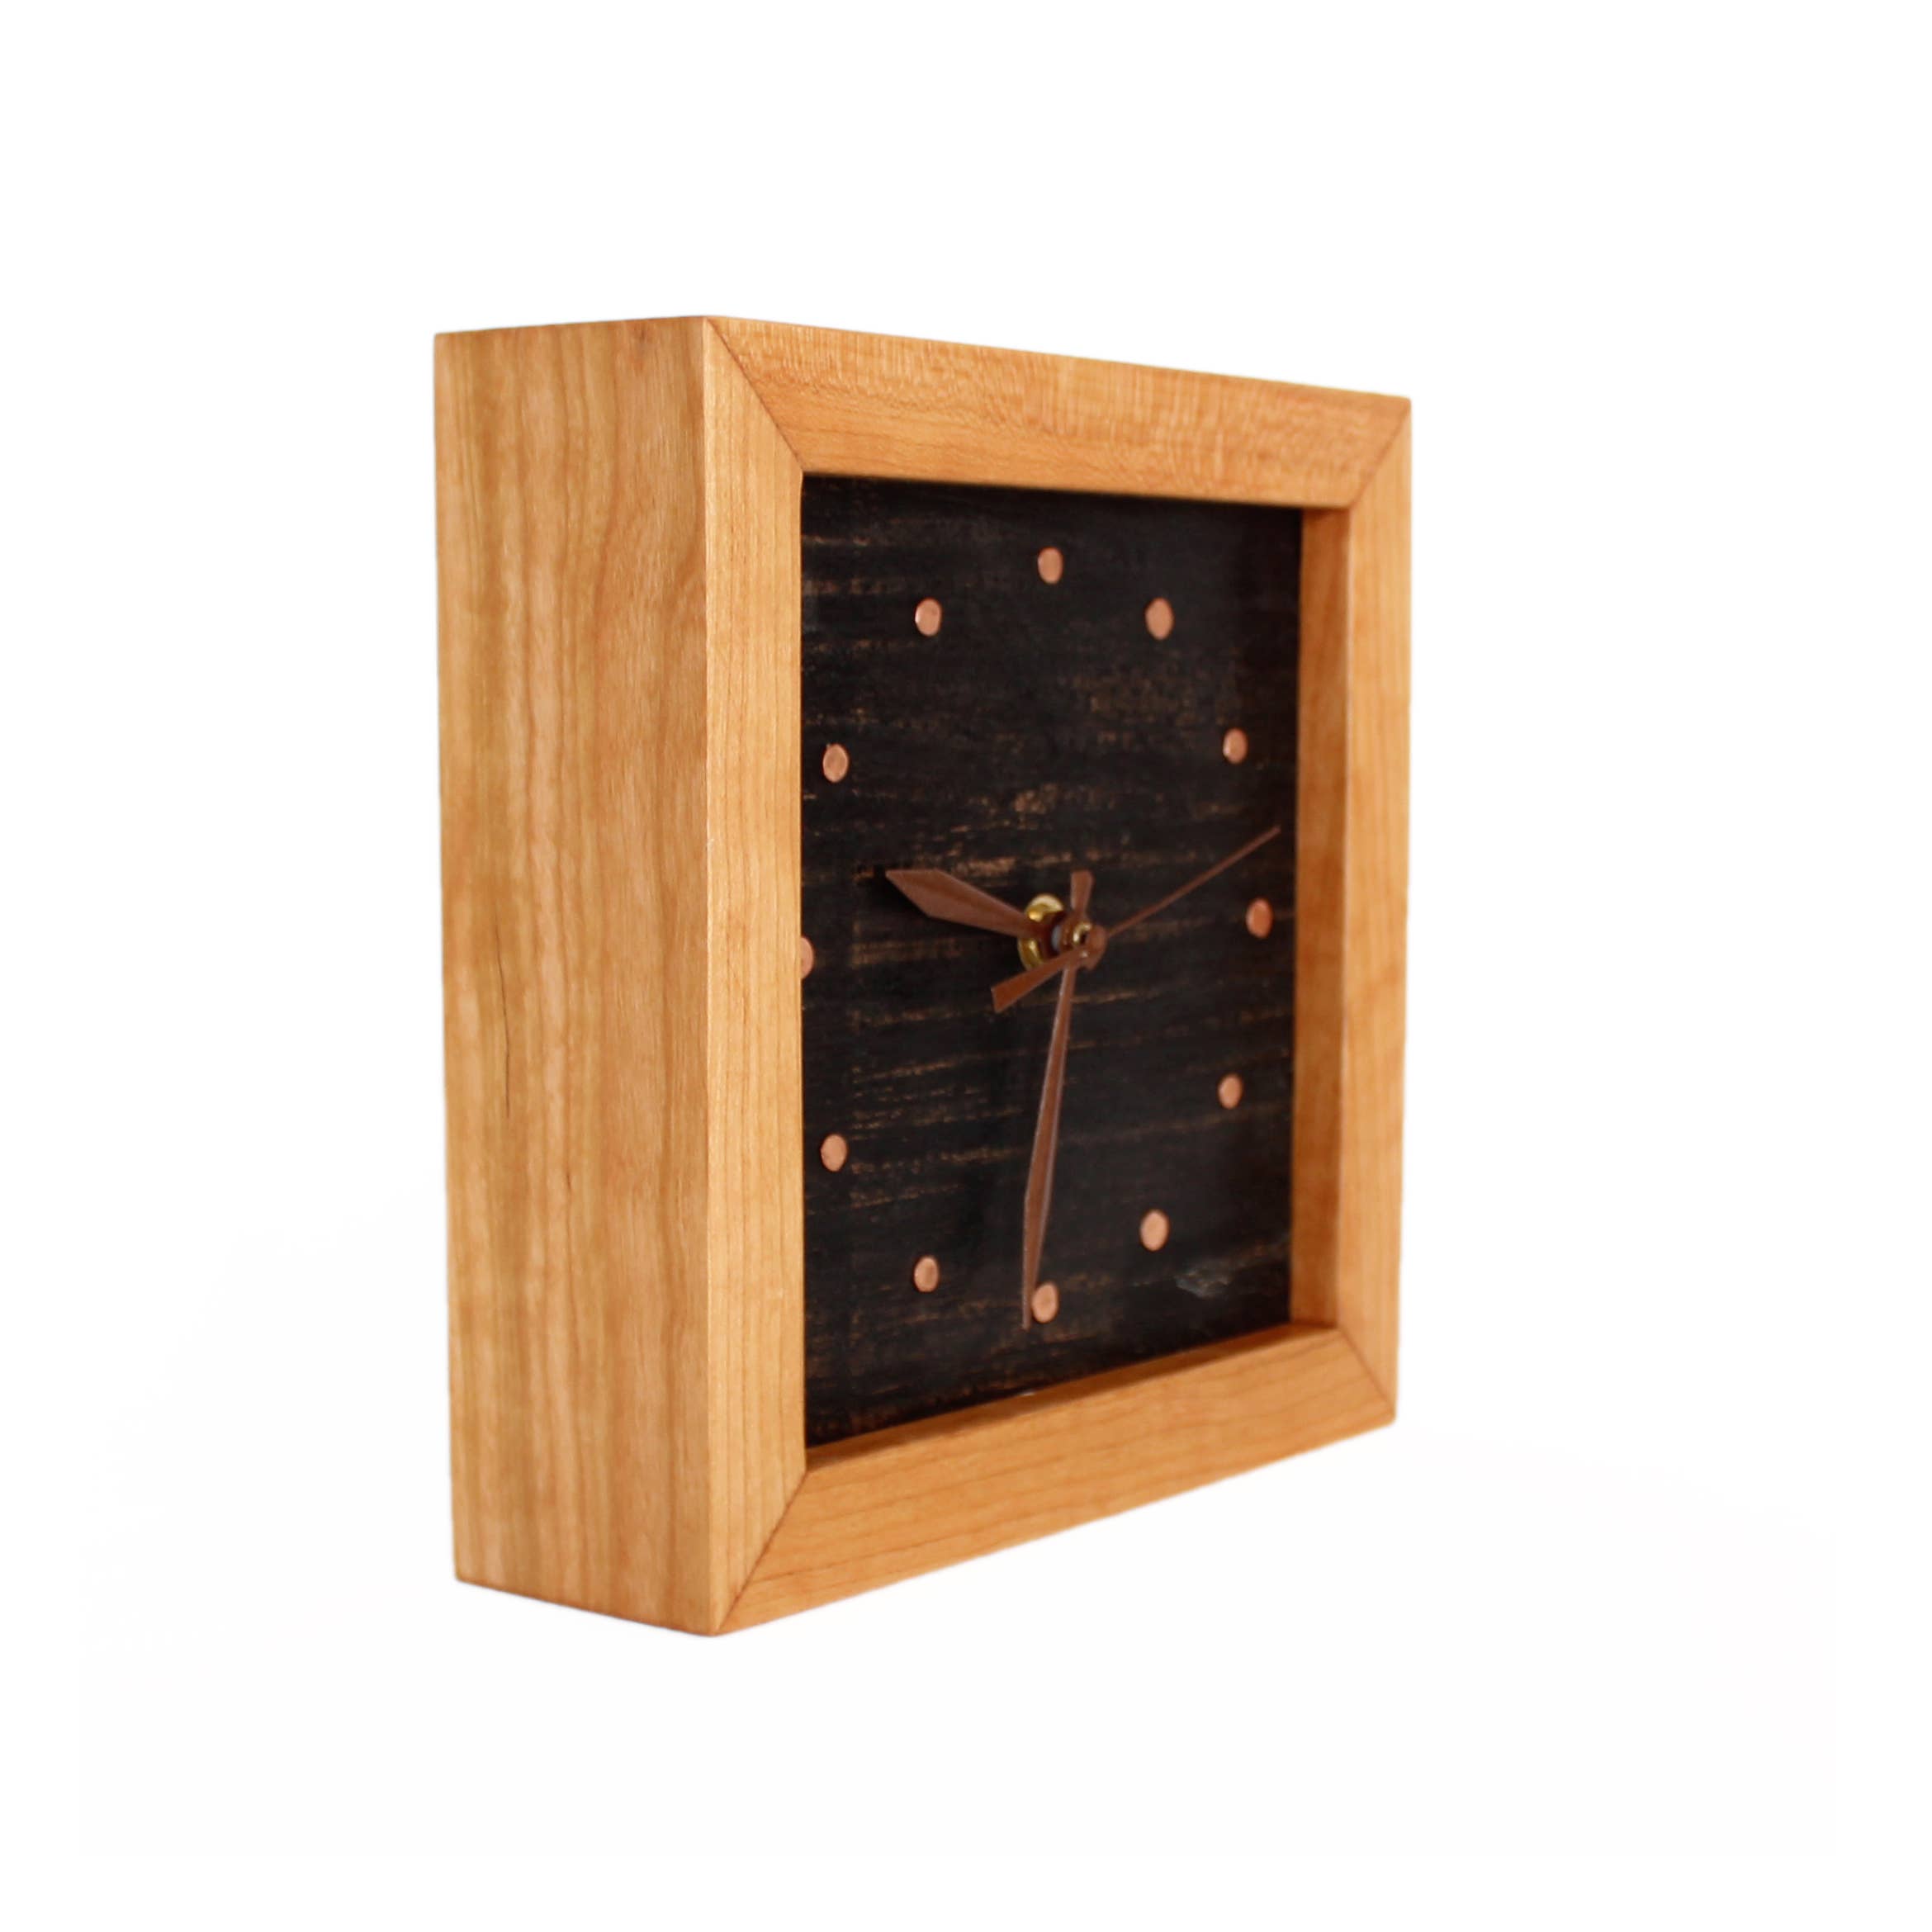 Clock, Box Clock - Distressed Black with Copper Tacks